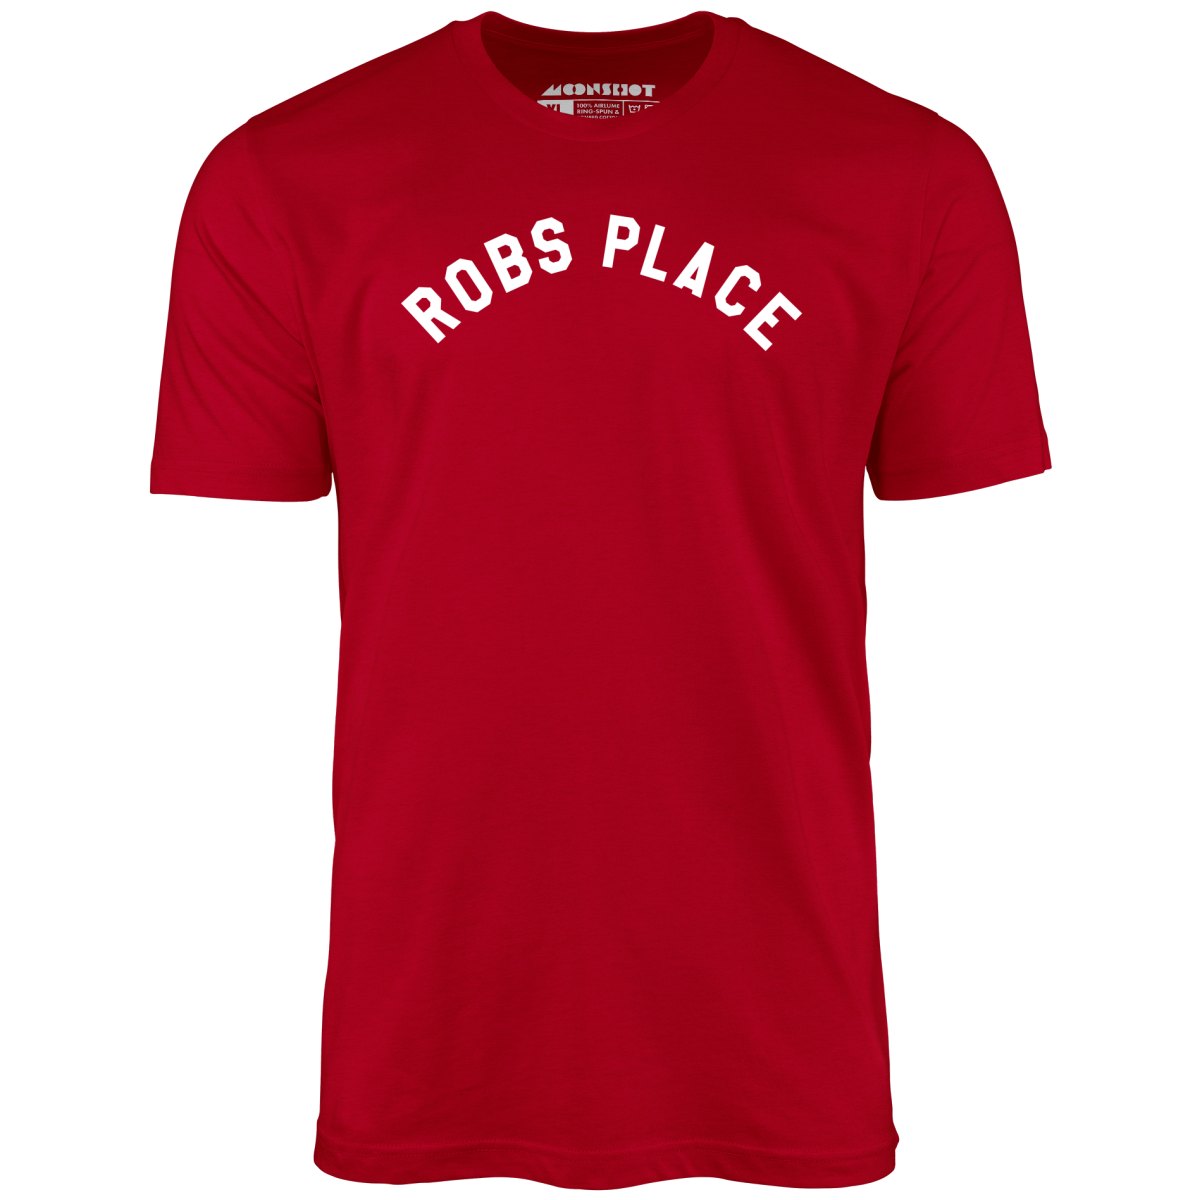 Rob's Place - Unisex T-Shirt